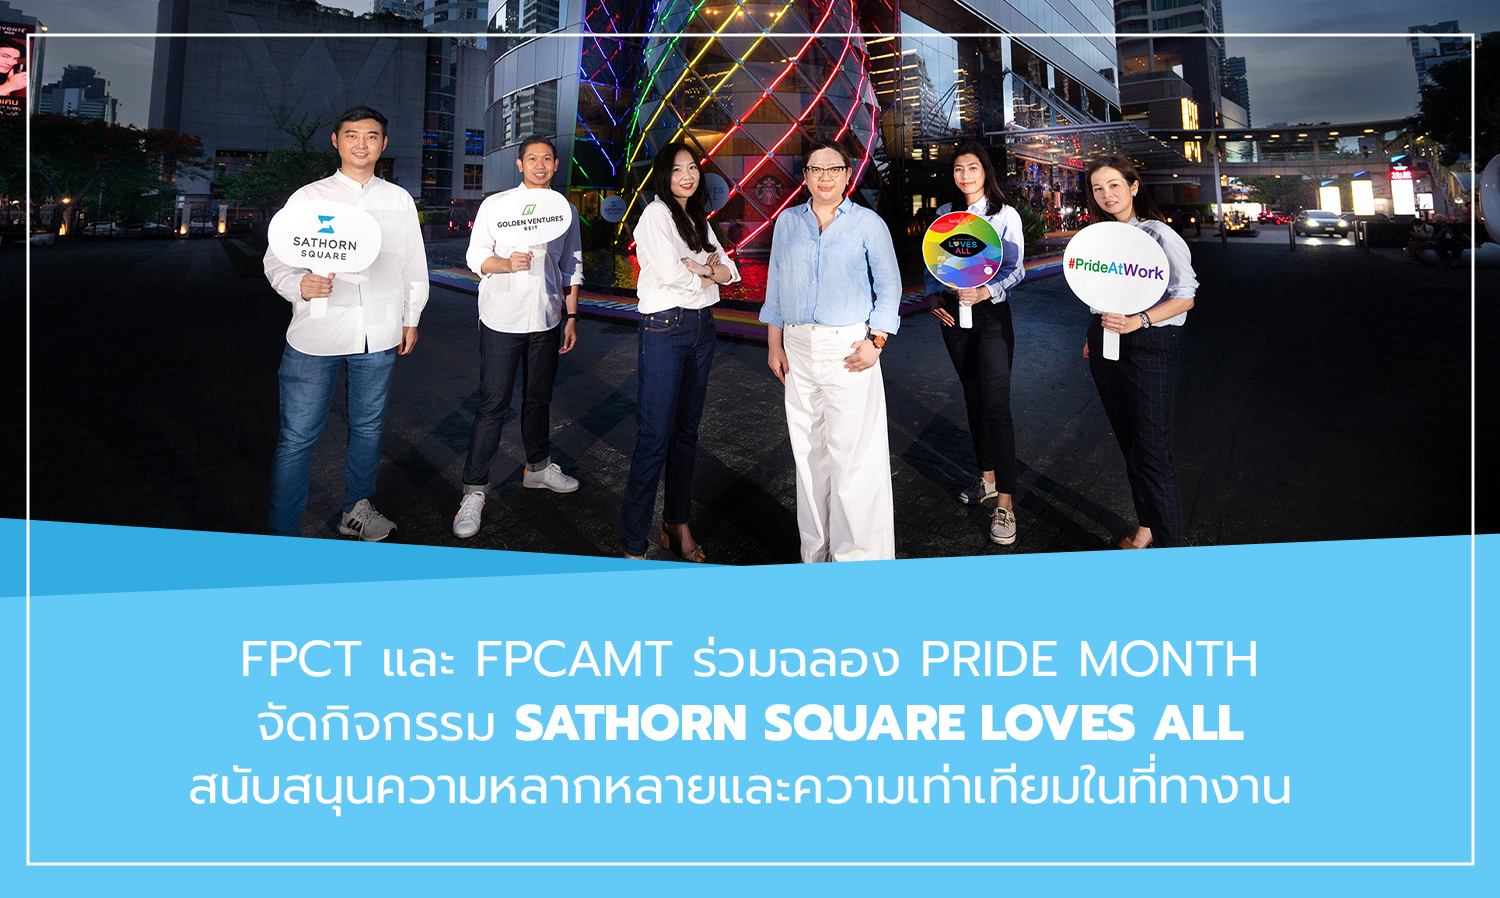 fpct-และ-fpcamt-ร่วมฉลอง-pride-month-จัดกิจกรรม-sathorn-square-loves-all-สนับสนุนความหลากหลายและความเท่าเทียมในที่ทางาน-